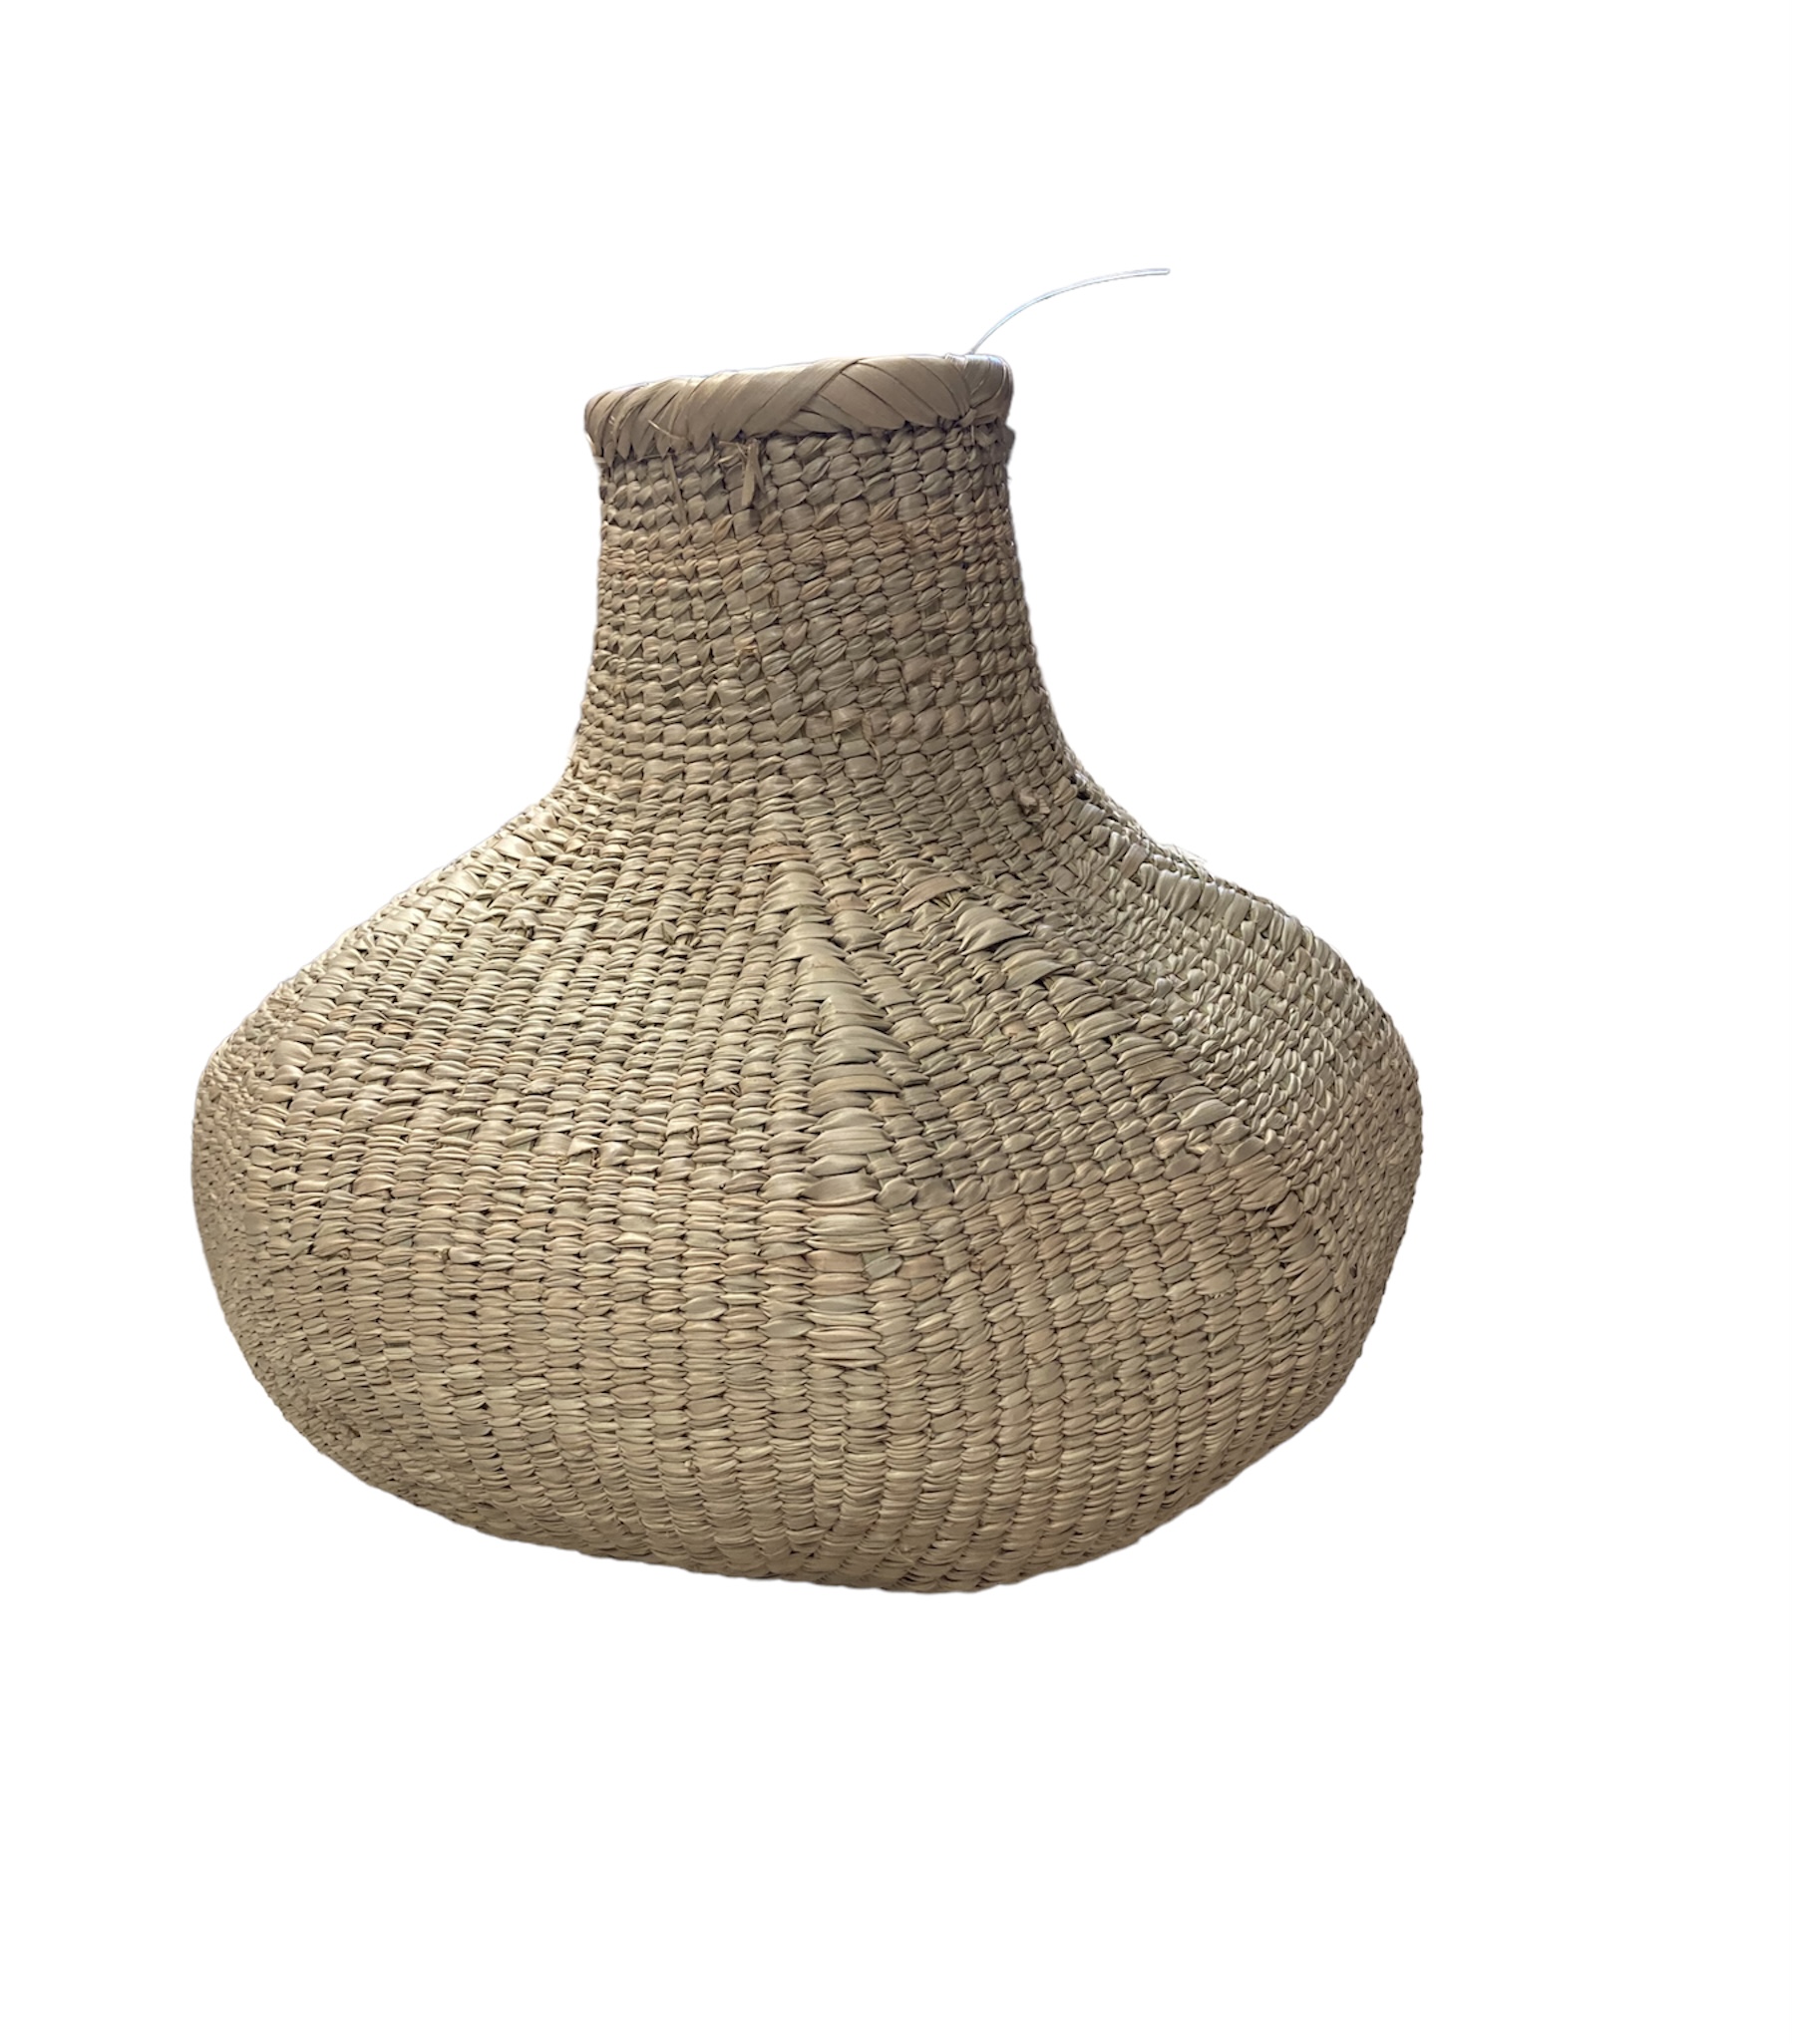 Garlic Gourd Basket from Zimbabwe : 9\" - 12\" in height